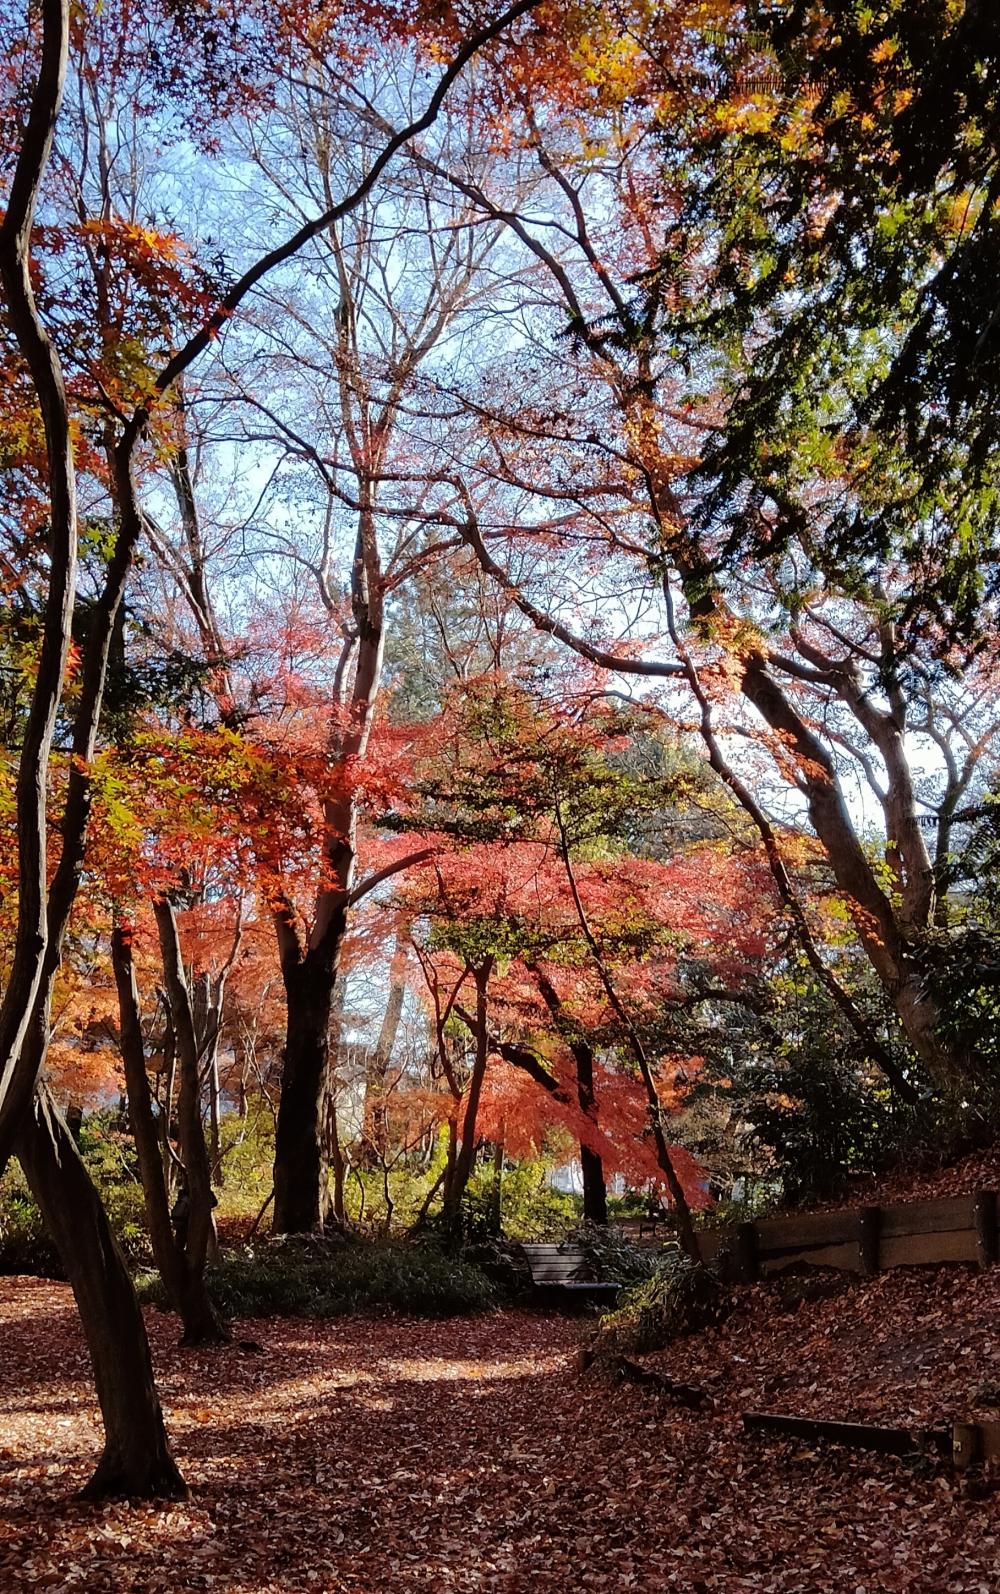 石神井公園記念庭園、史跡公園の紅葉 画像